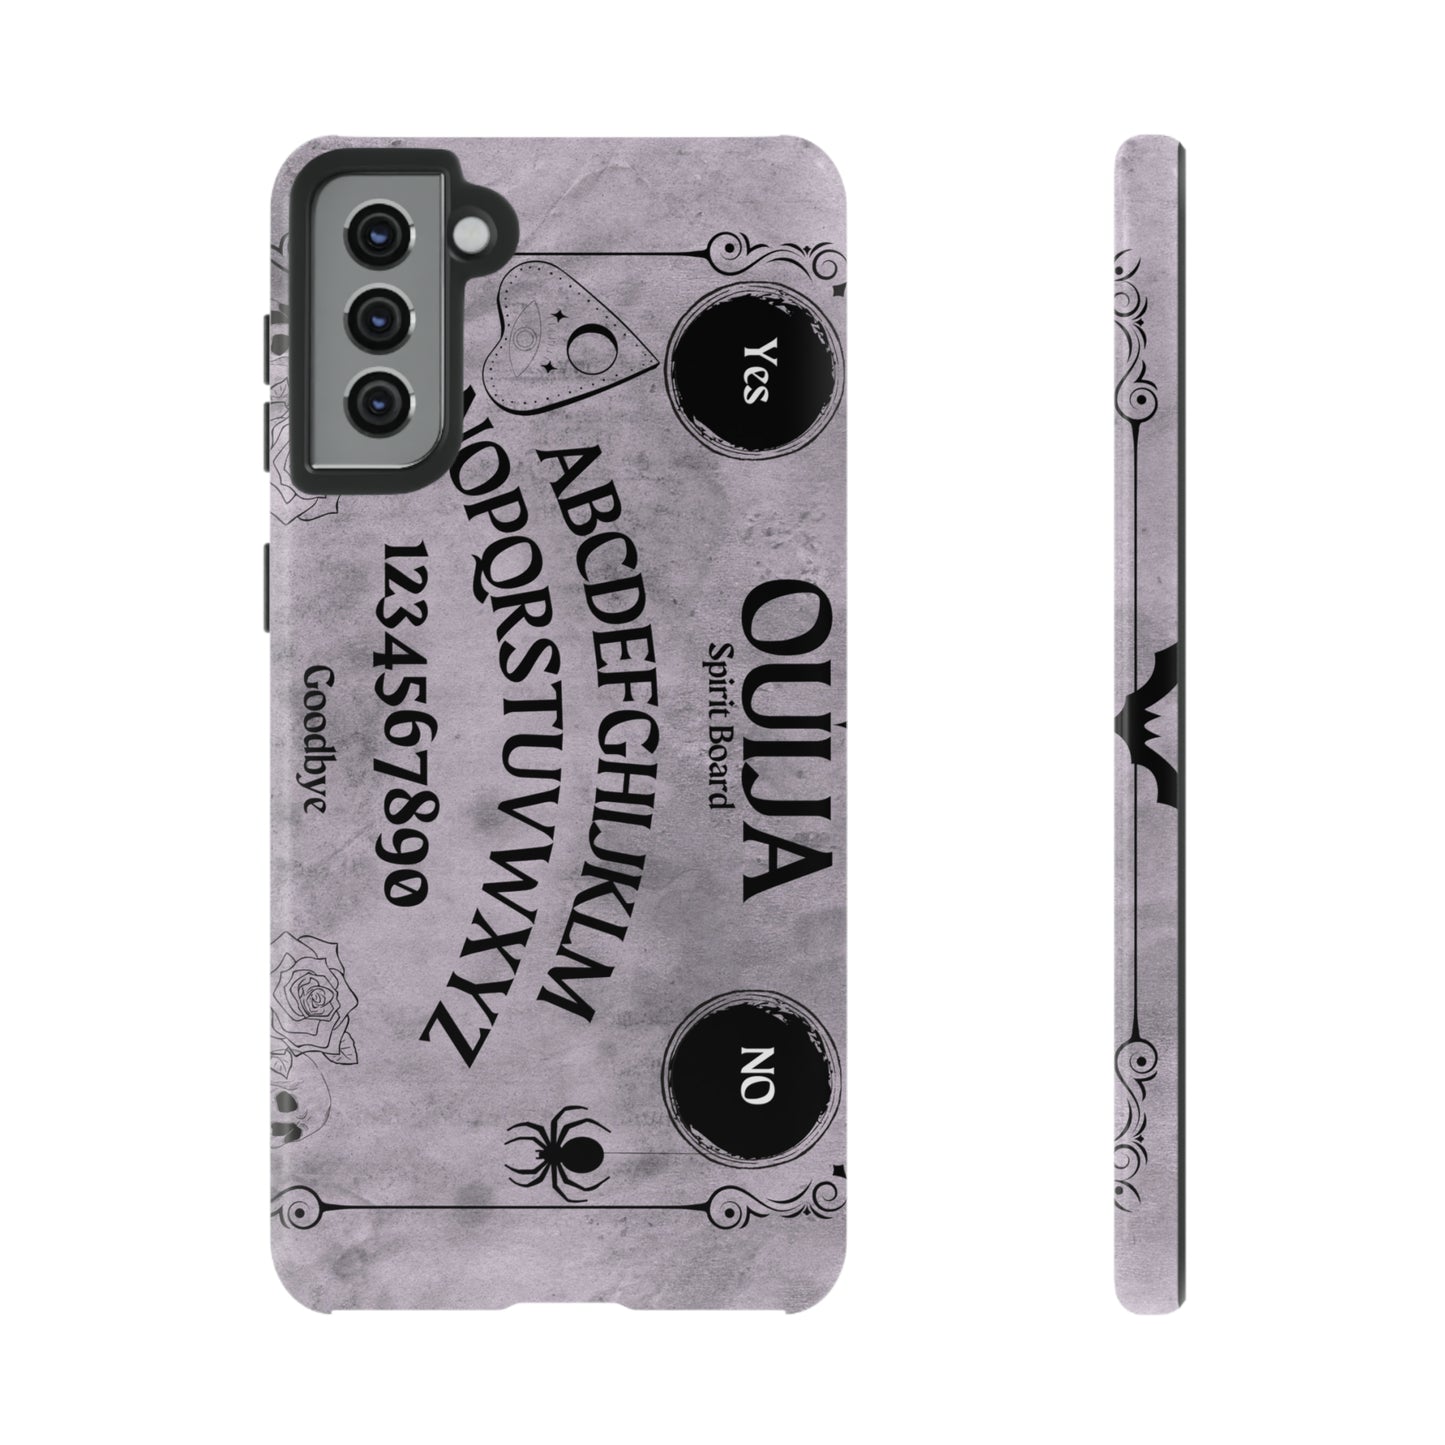 Ouija Board Tough Phone Cases For Samsung iPhone GooglePhone CaseVTZdesignsSamsung Galaxy S21 PlusGlossyAccessoriesGlossyhalloween